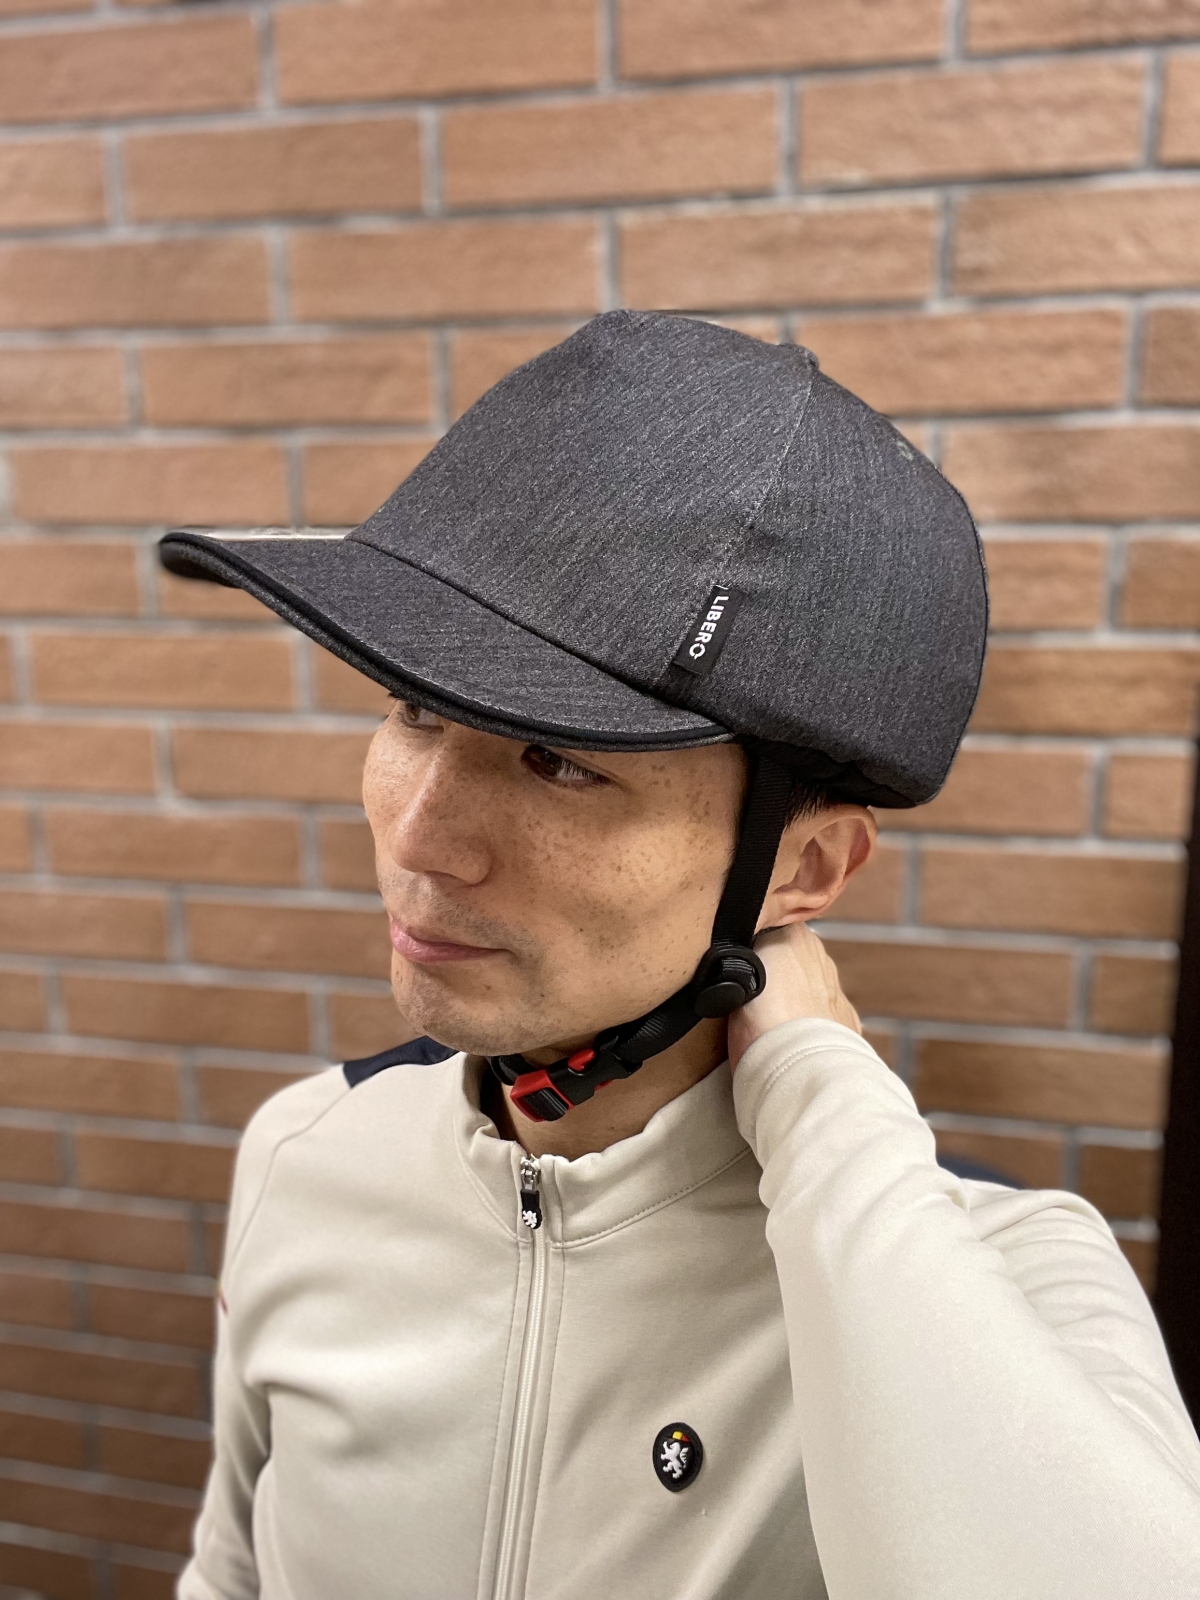 KABUTO LIBERO ヘルメット テレビで紹介 メーテレ 名古屋テレビ アップ ドデスカ 帽子みたいなヘルメット 努力義務化